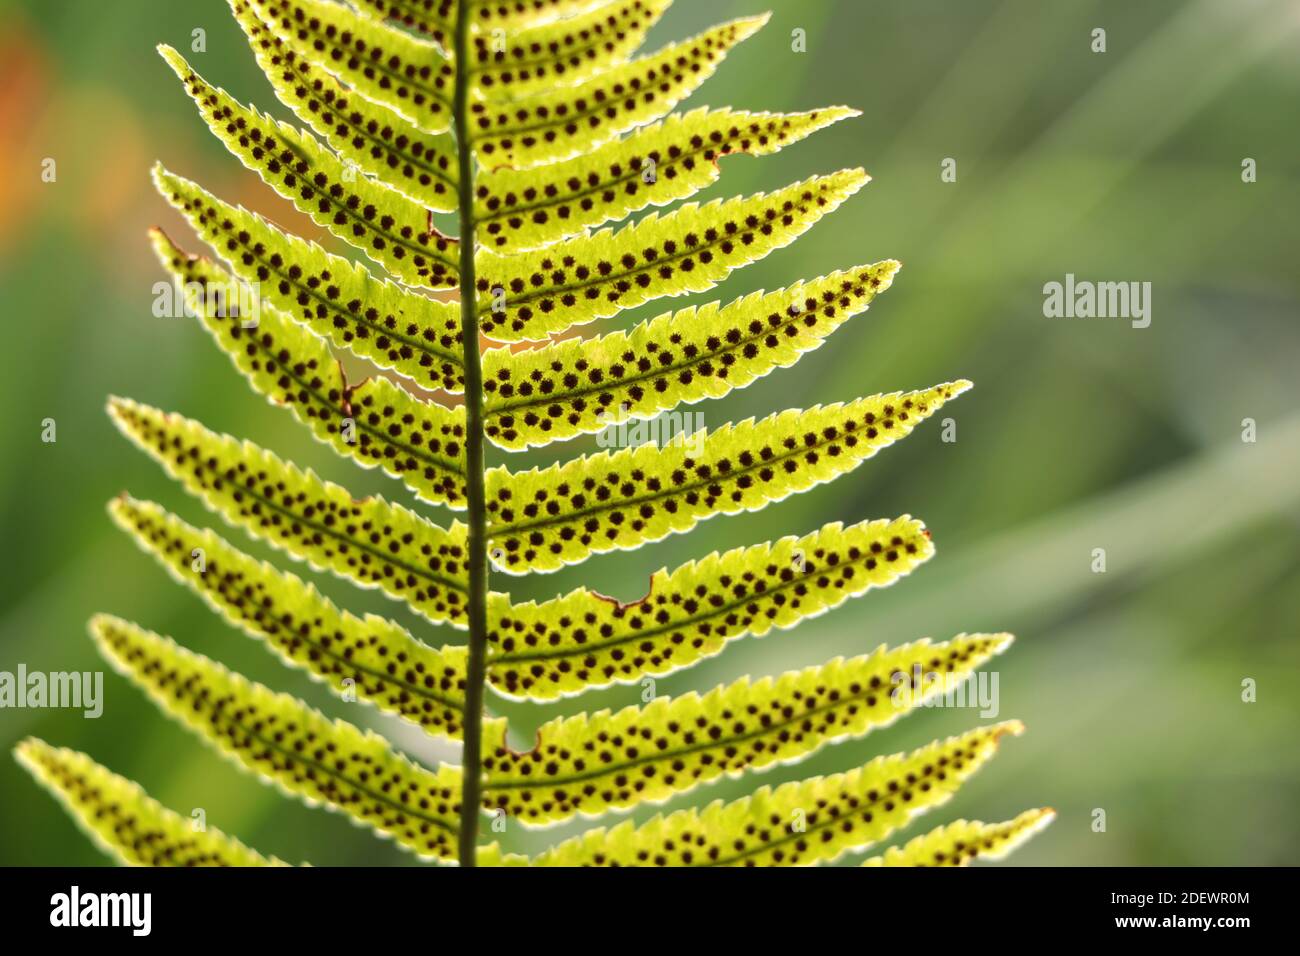 Sword fern leaf with sporangia close up, polystichum munitum Stock Photo